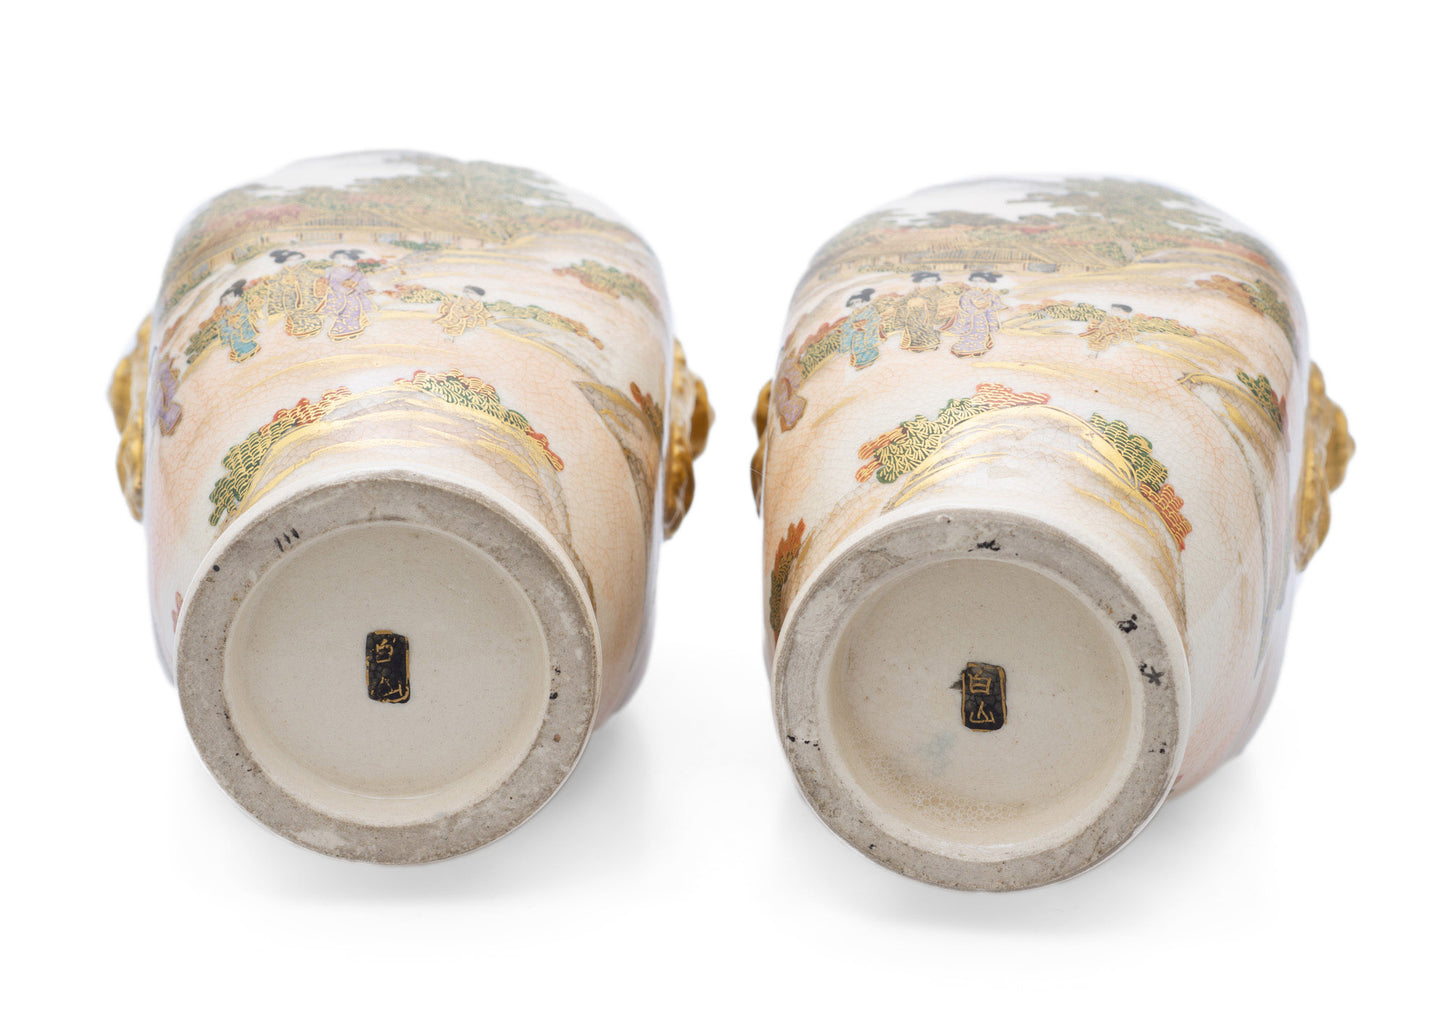 Pair Antique Satsuma Ware Pottery Vases by Hakusan - Japanese Meiji c1880 (Code 2473)